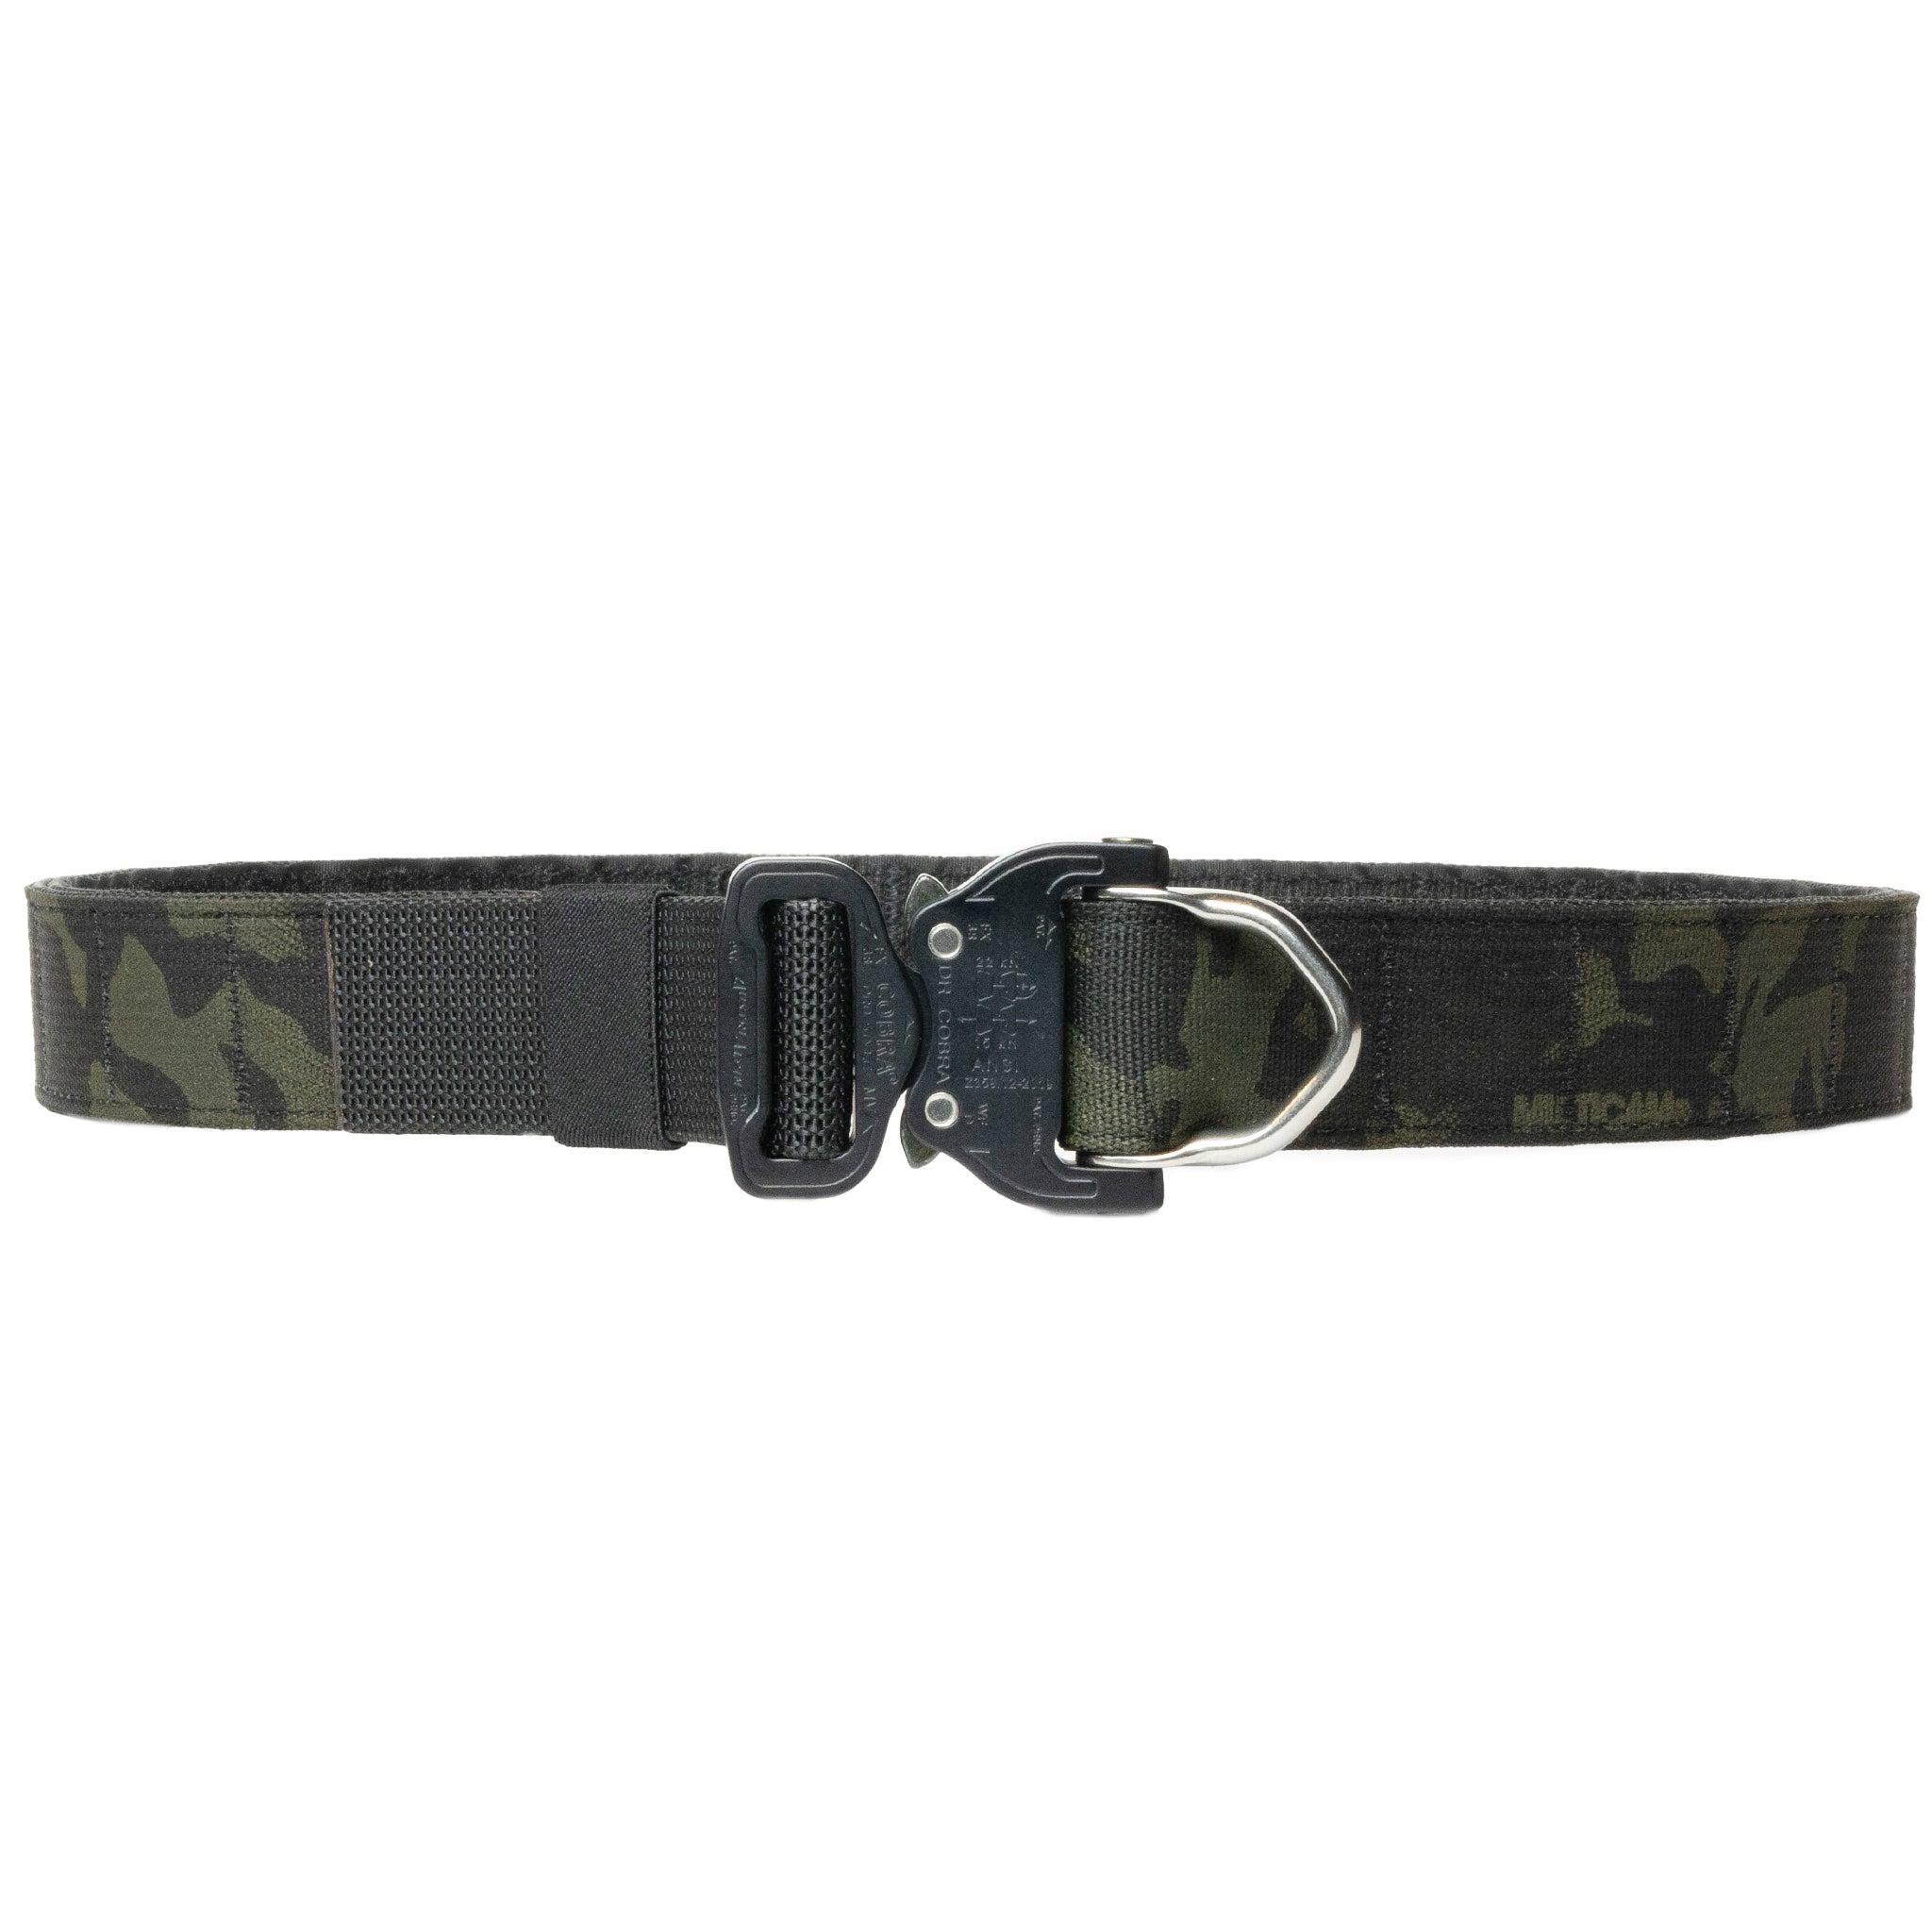 Tactical Duty belt  Canadian Armour Ltd.